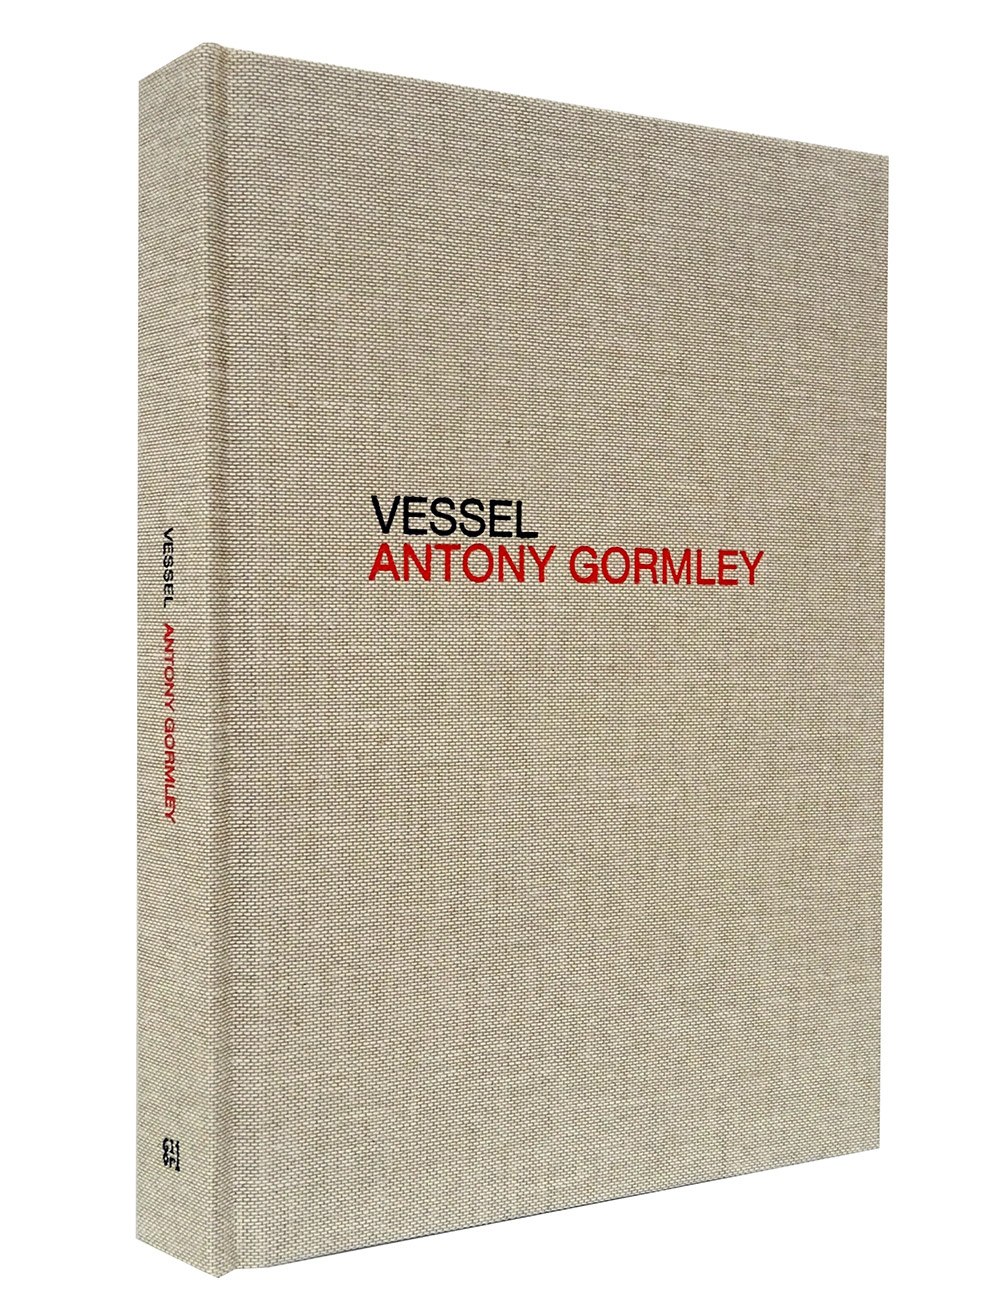 ANTONY GORMLEY. VESSEL, 2012